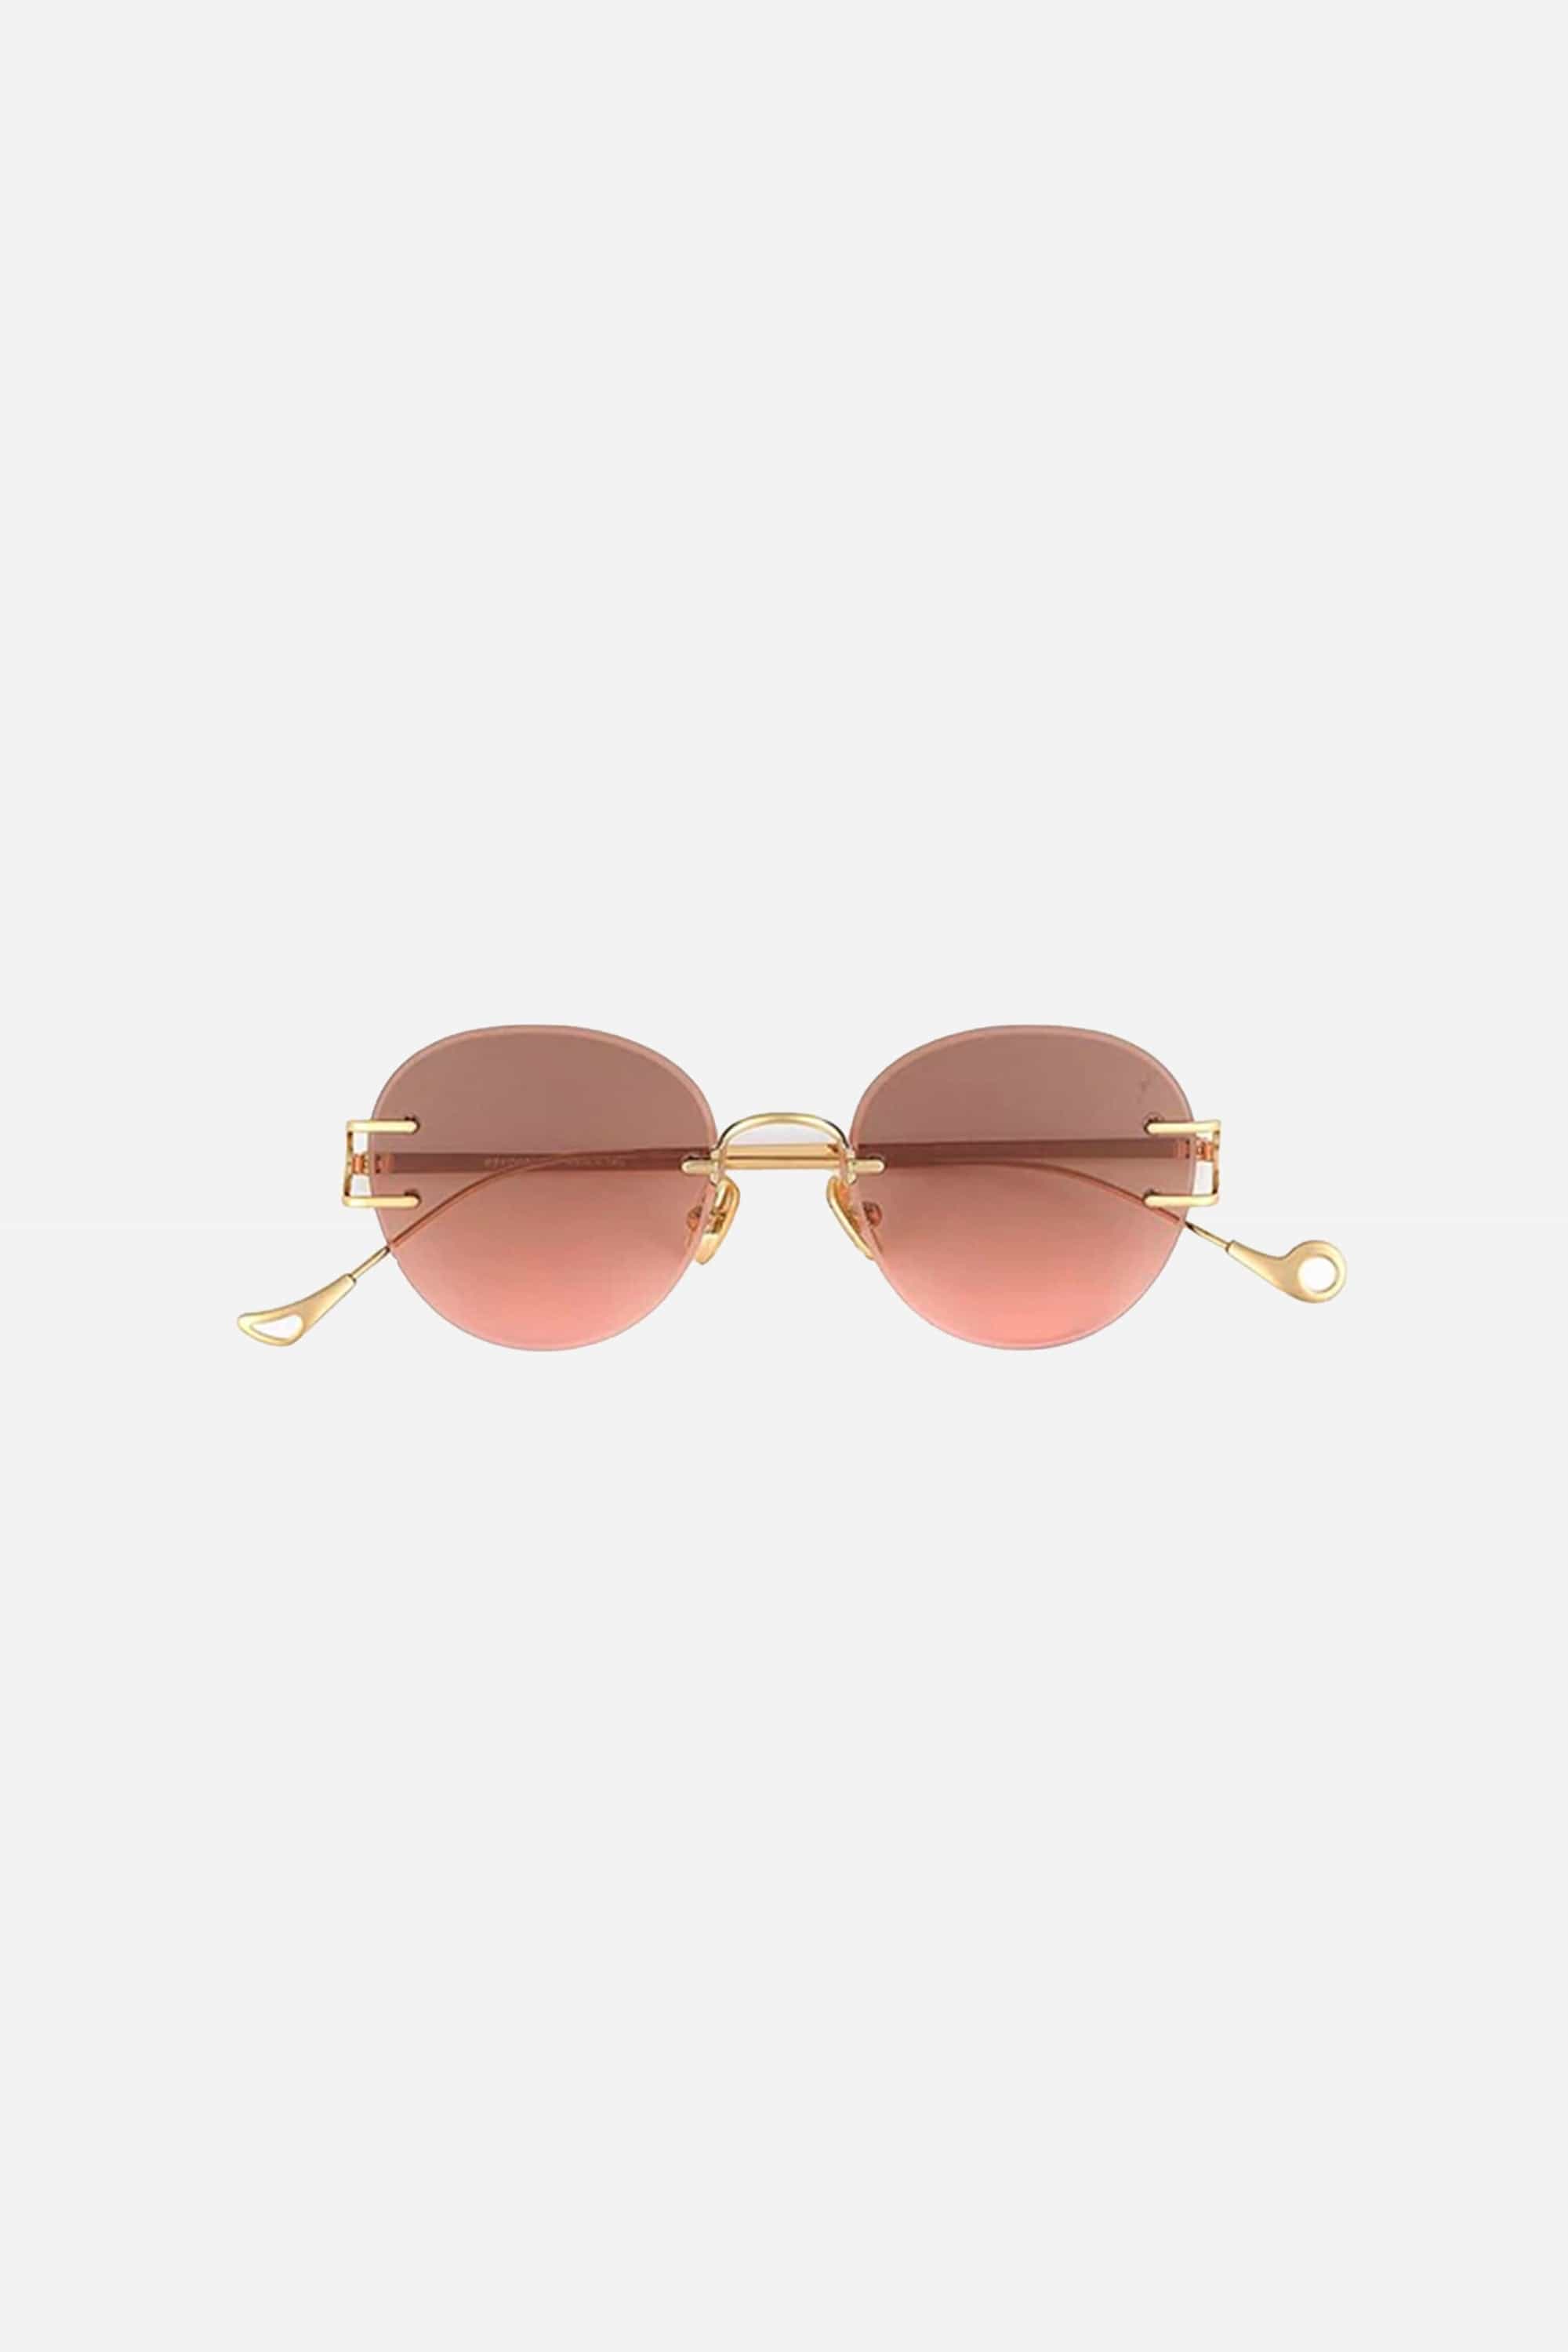 Eyepetizer round rimless sunglasses - Eyewear Club